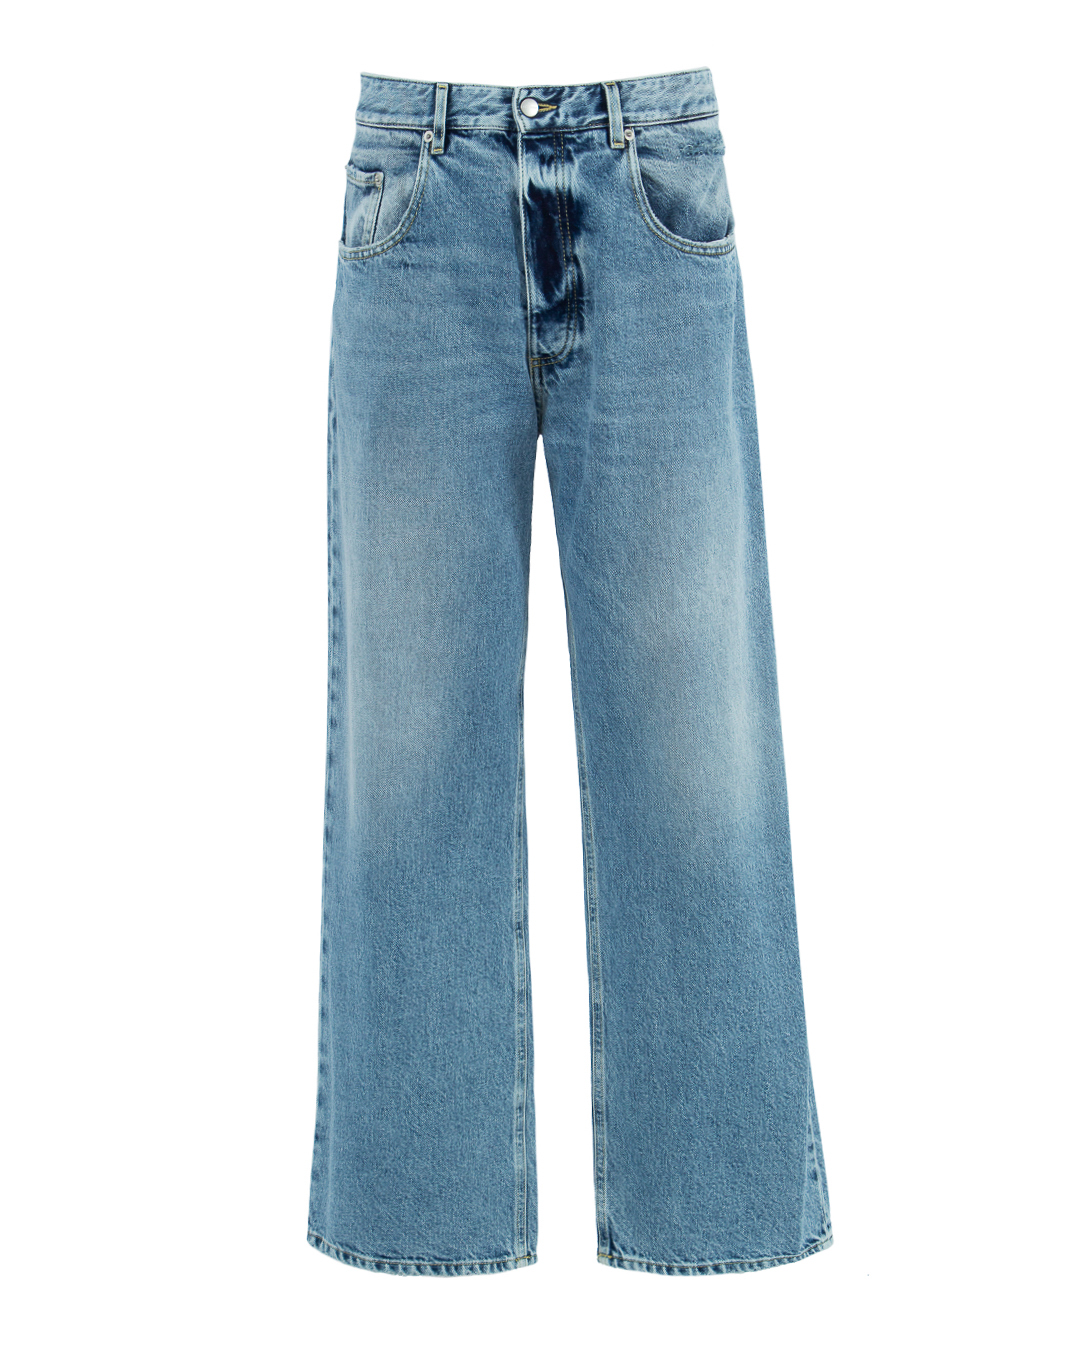 джинсы ICON DENIM WILLID754 синий 35, размер 35 - фото 1